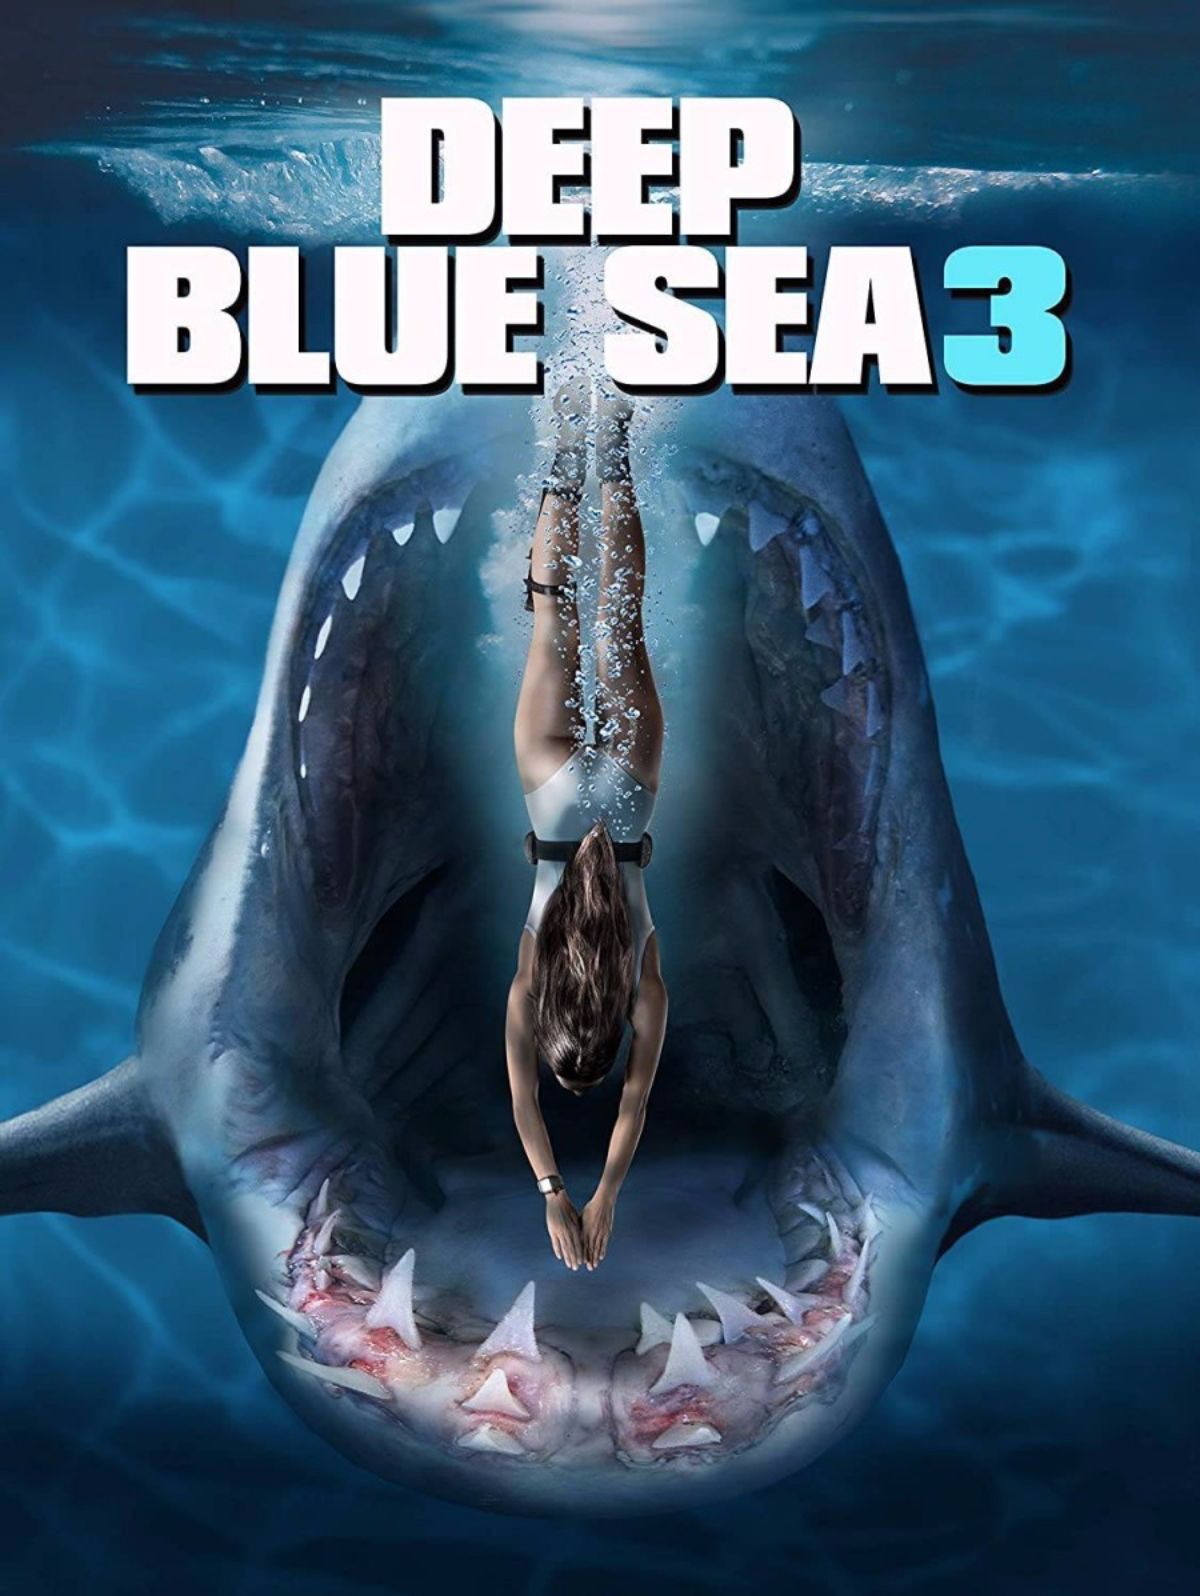 Dep Blue Sea 3 Poster